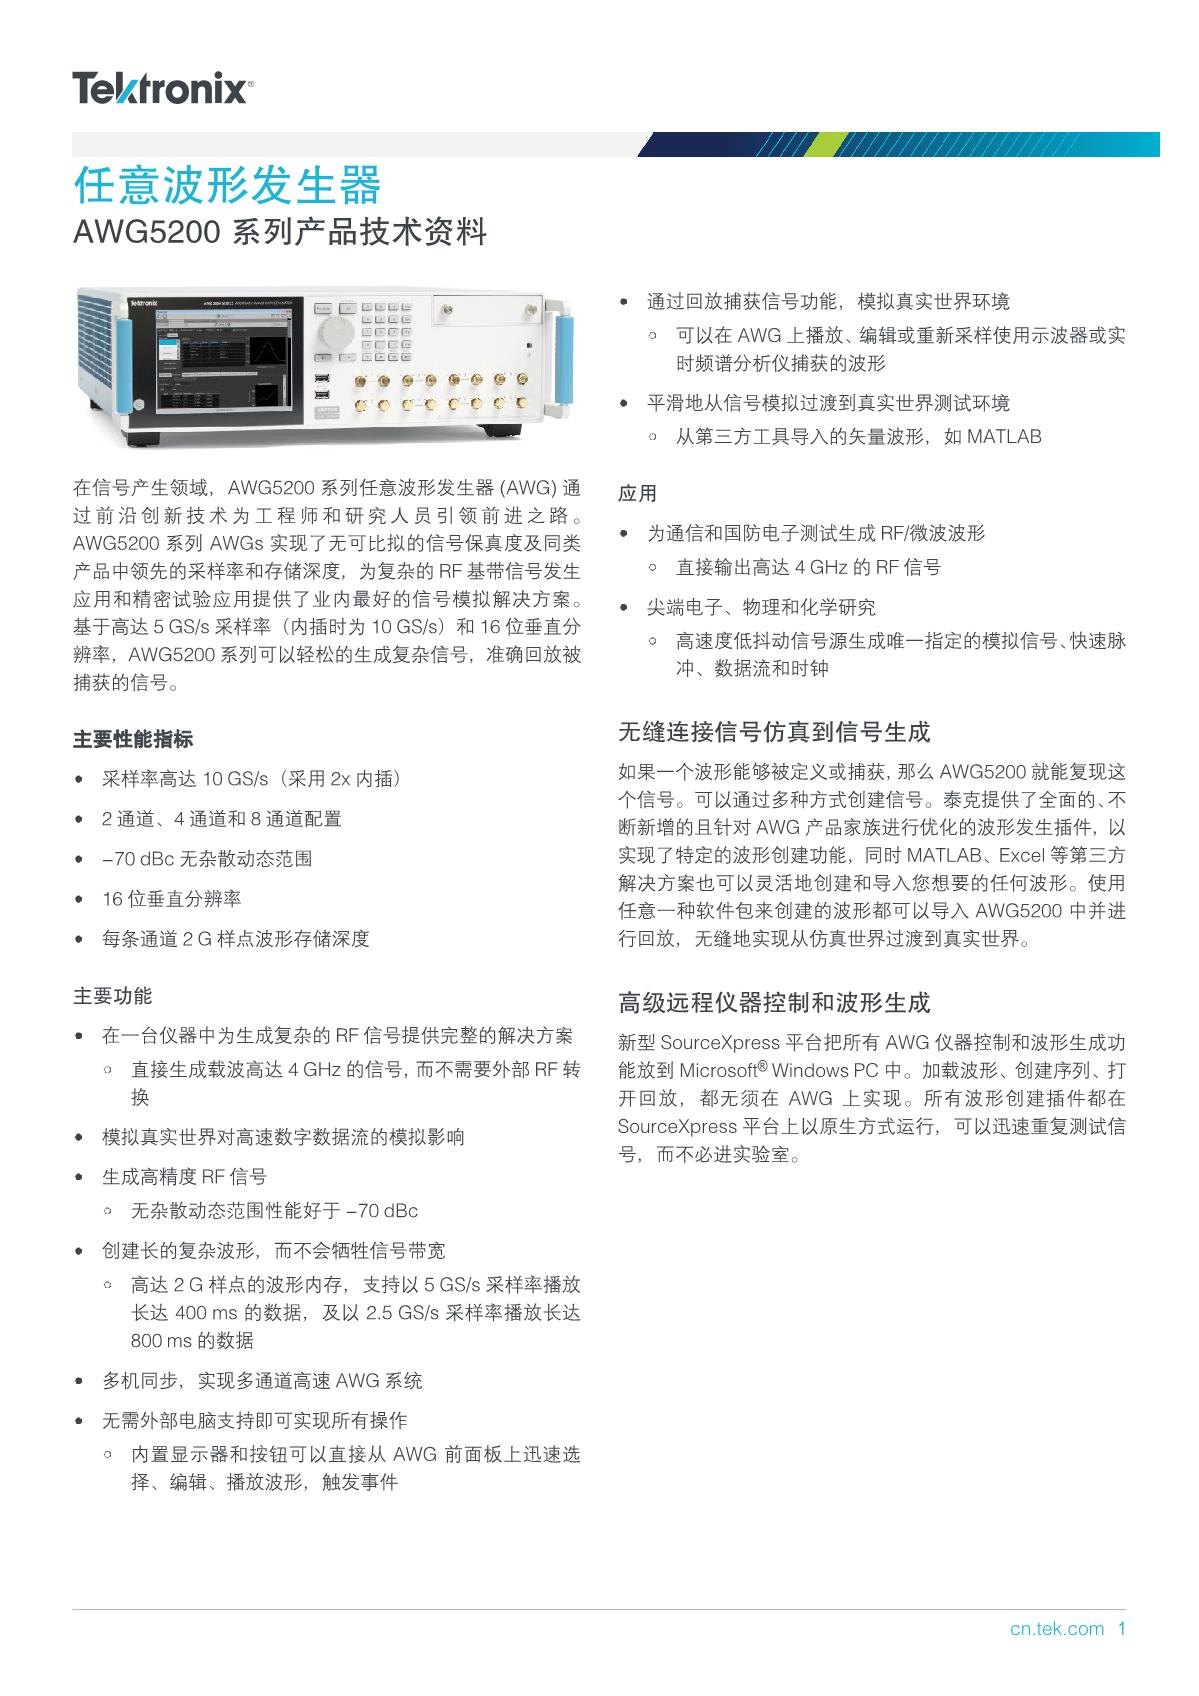 AWG5200-Series-Arbitrary-Waveform-Generator-Datasheet-ZH-CN-76C608486_1.JPG